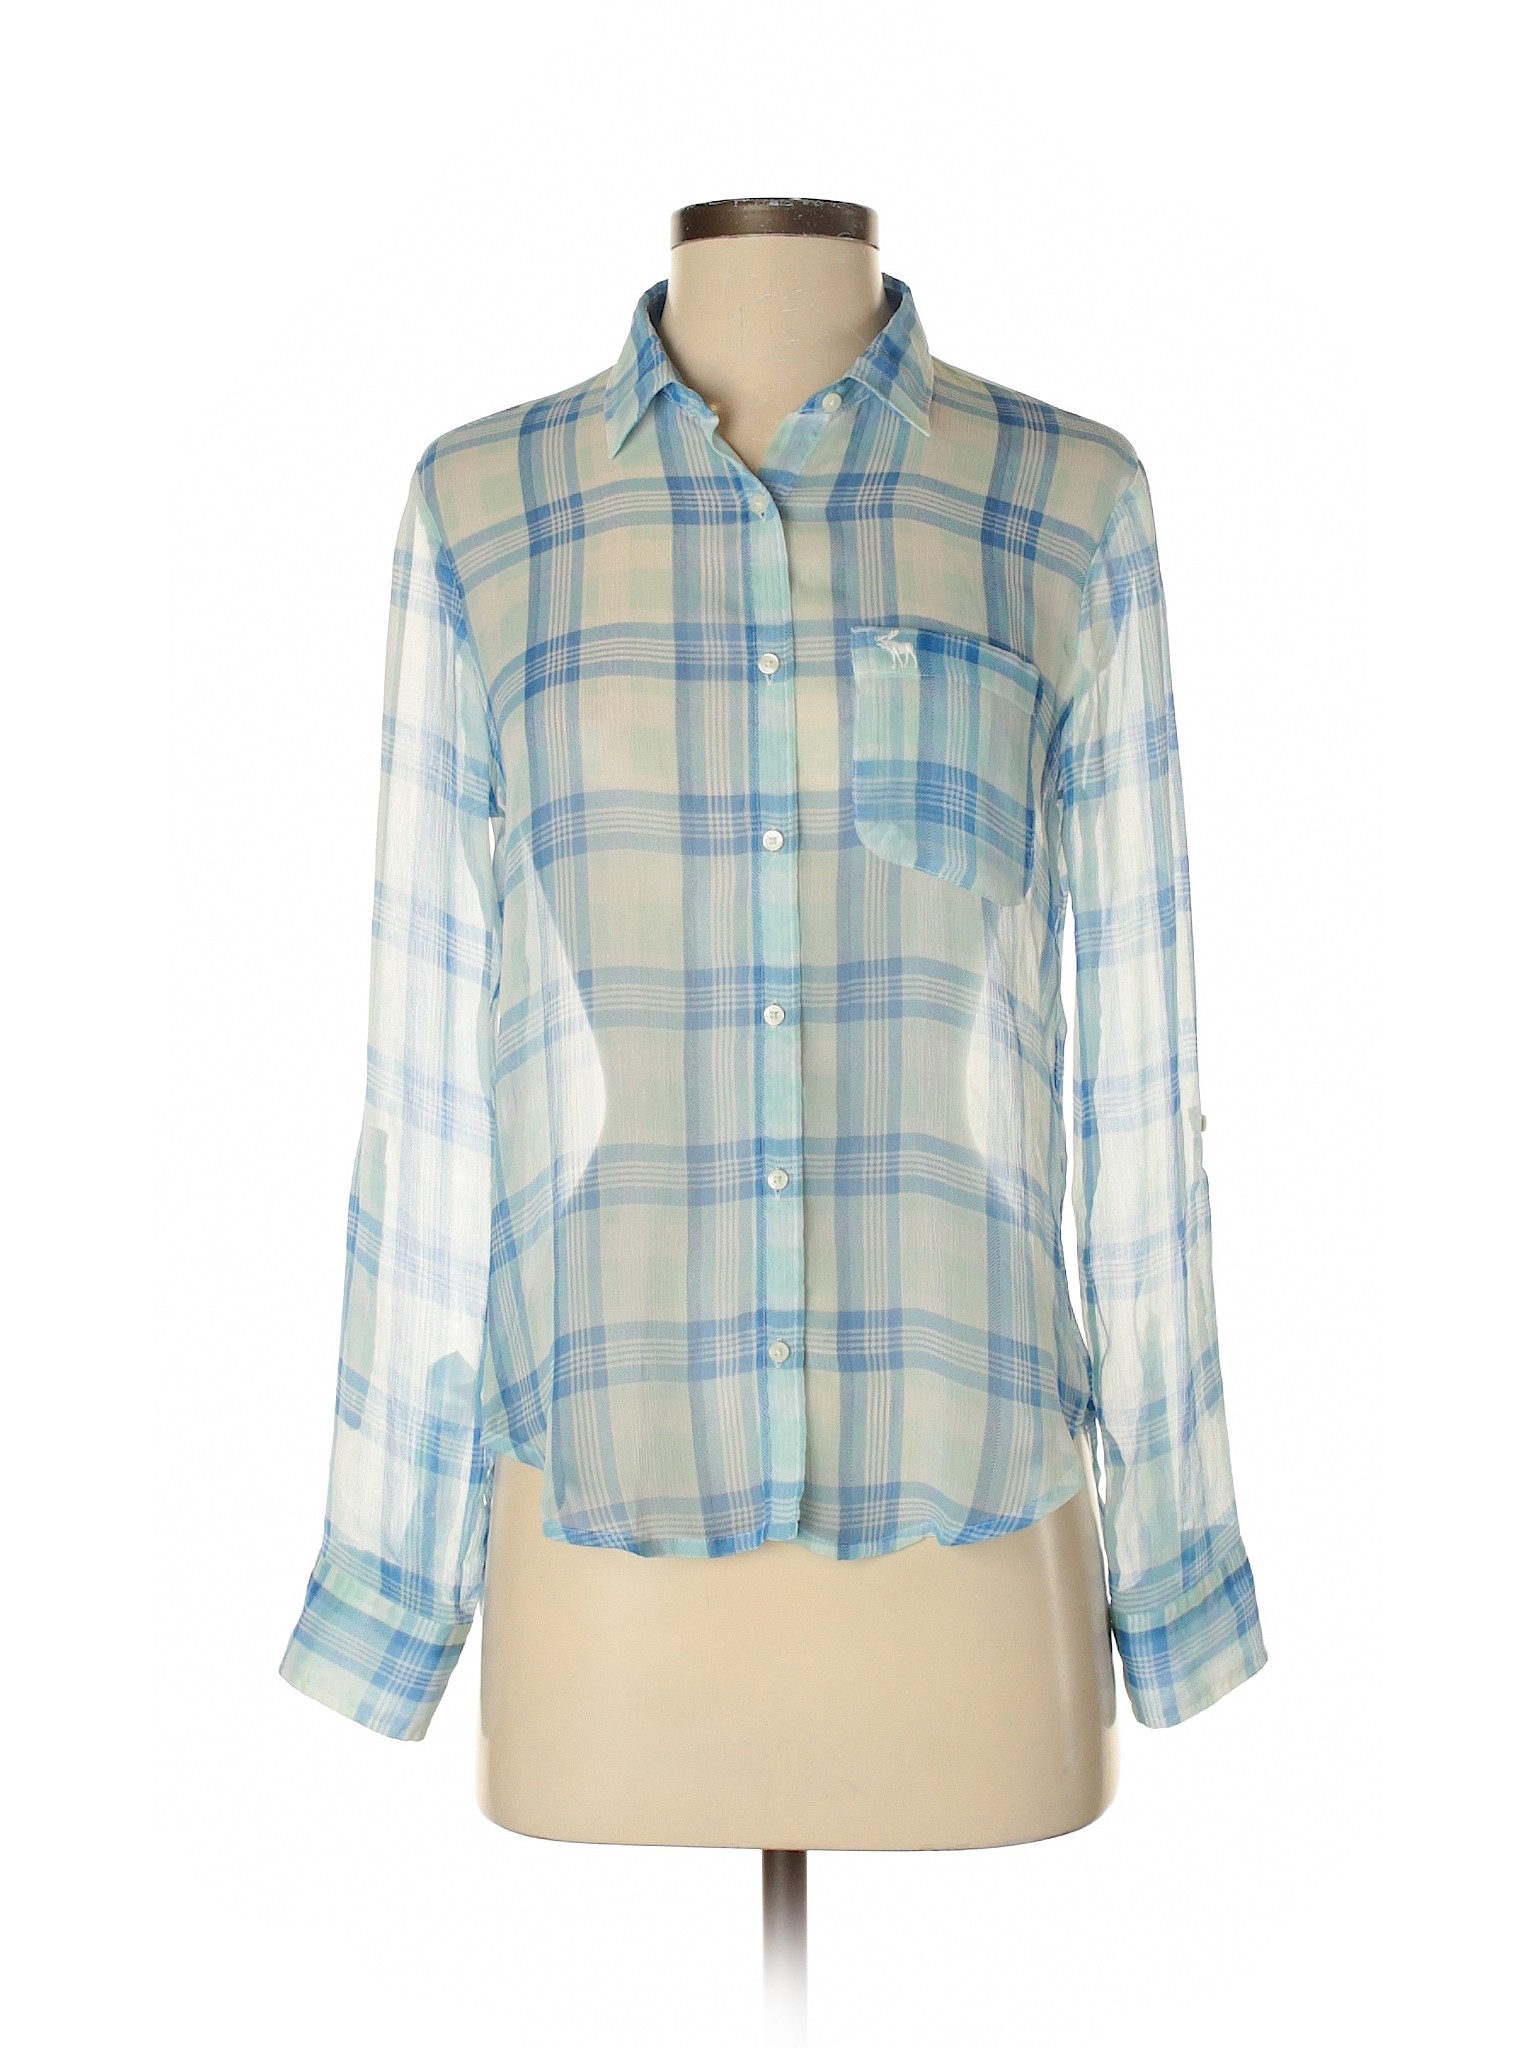 Abercrombie & Fitch Women Blue Long Sleeve Blouse XS | eBay